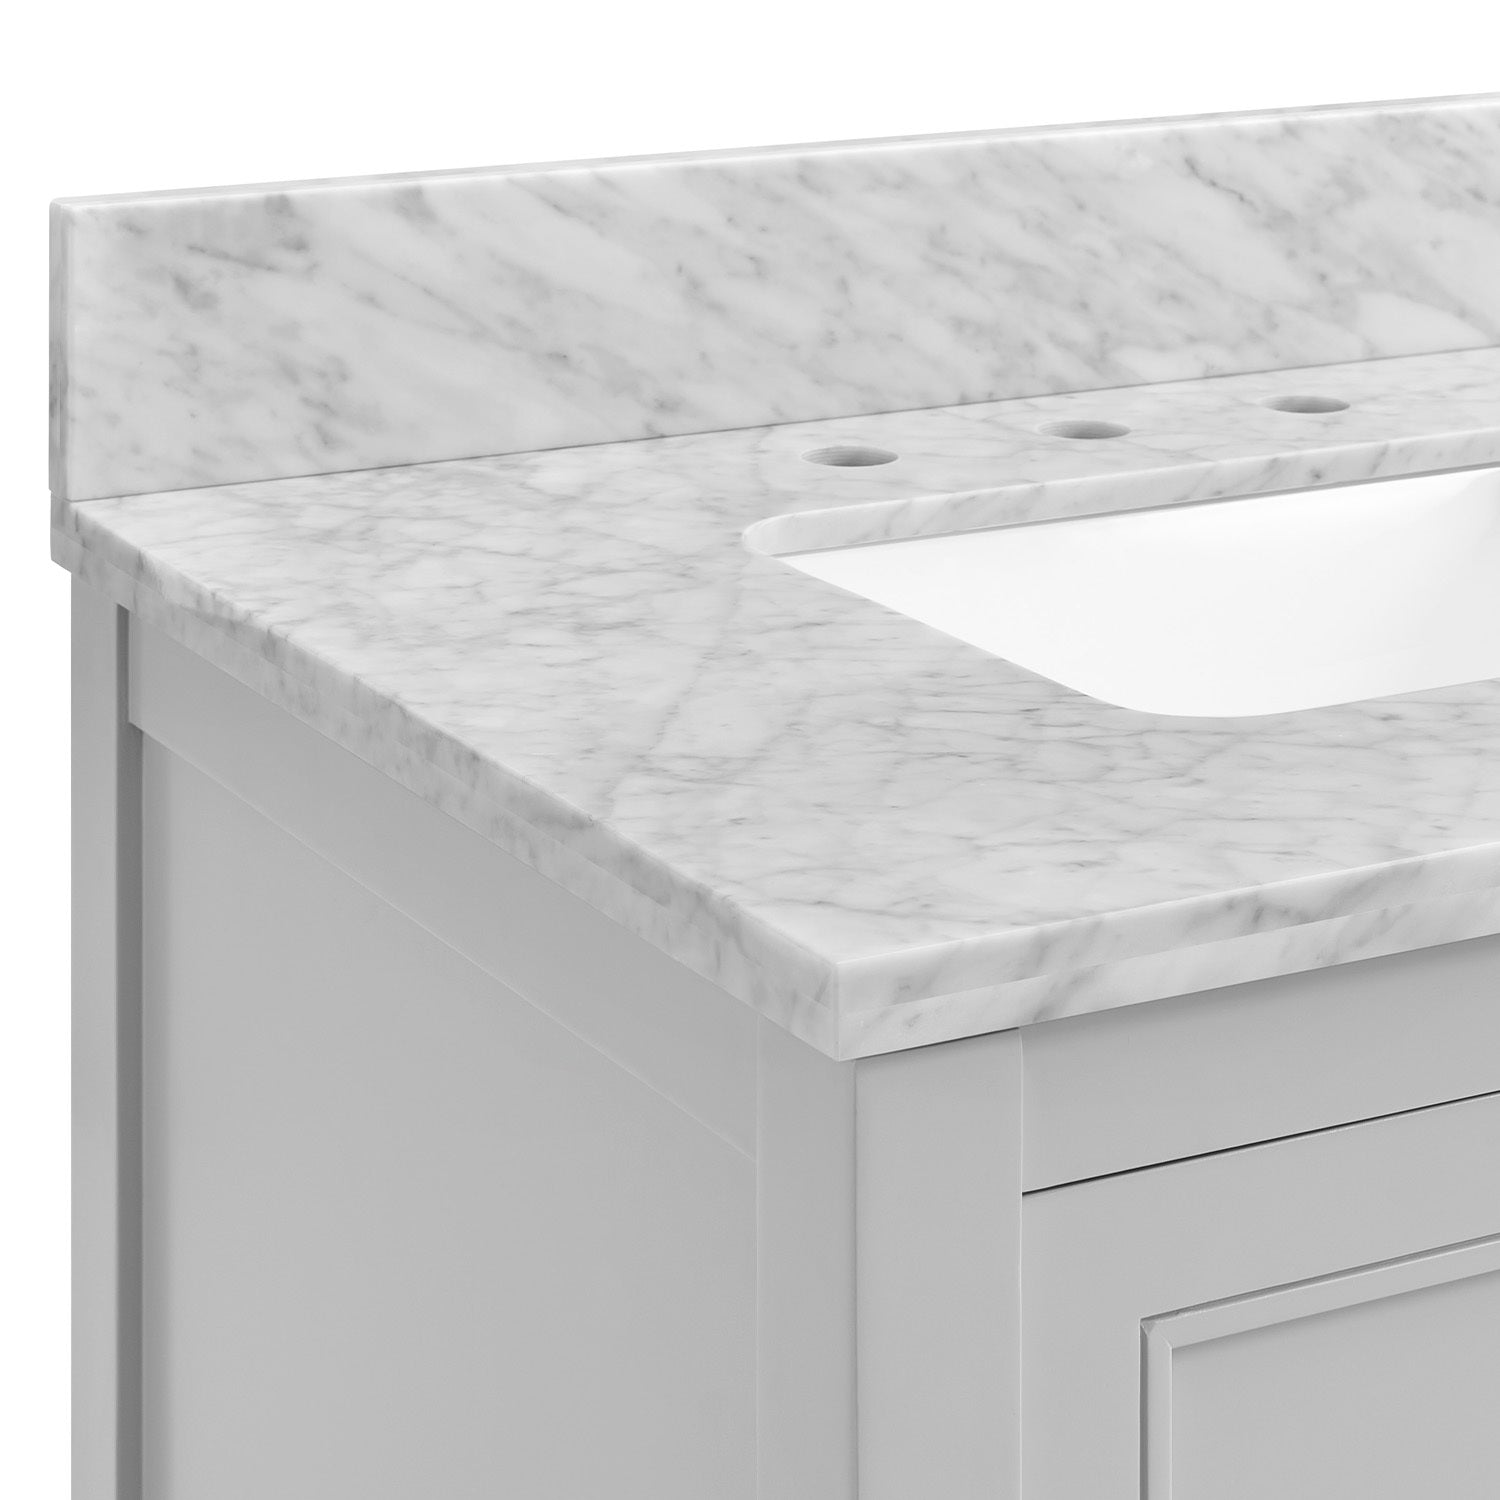 60 in Undermount Double Sinks Bathroom Storage Cabinet light gray-4+-soft close